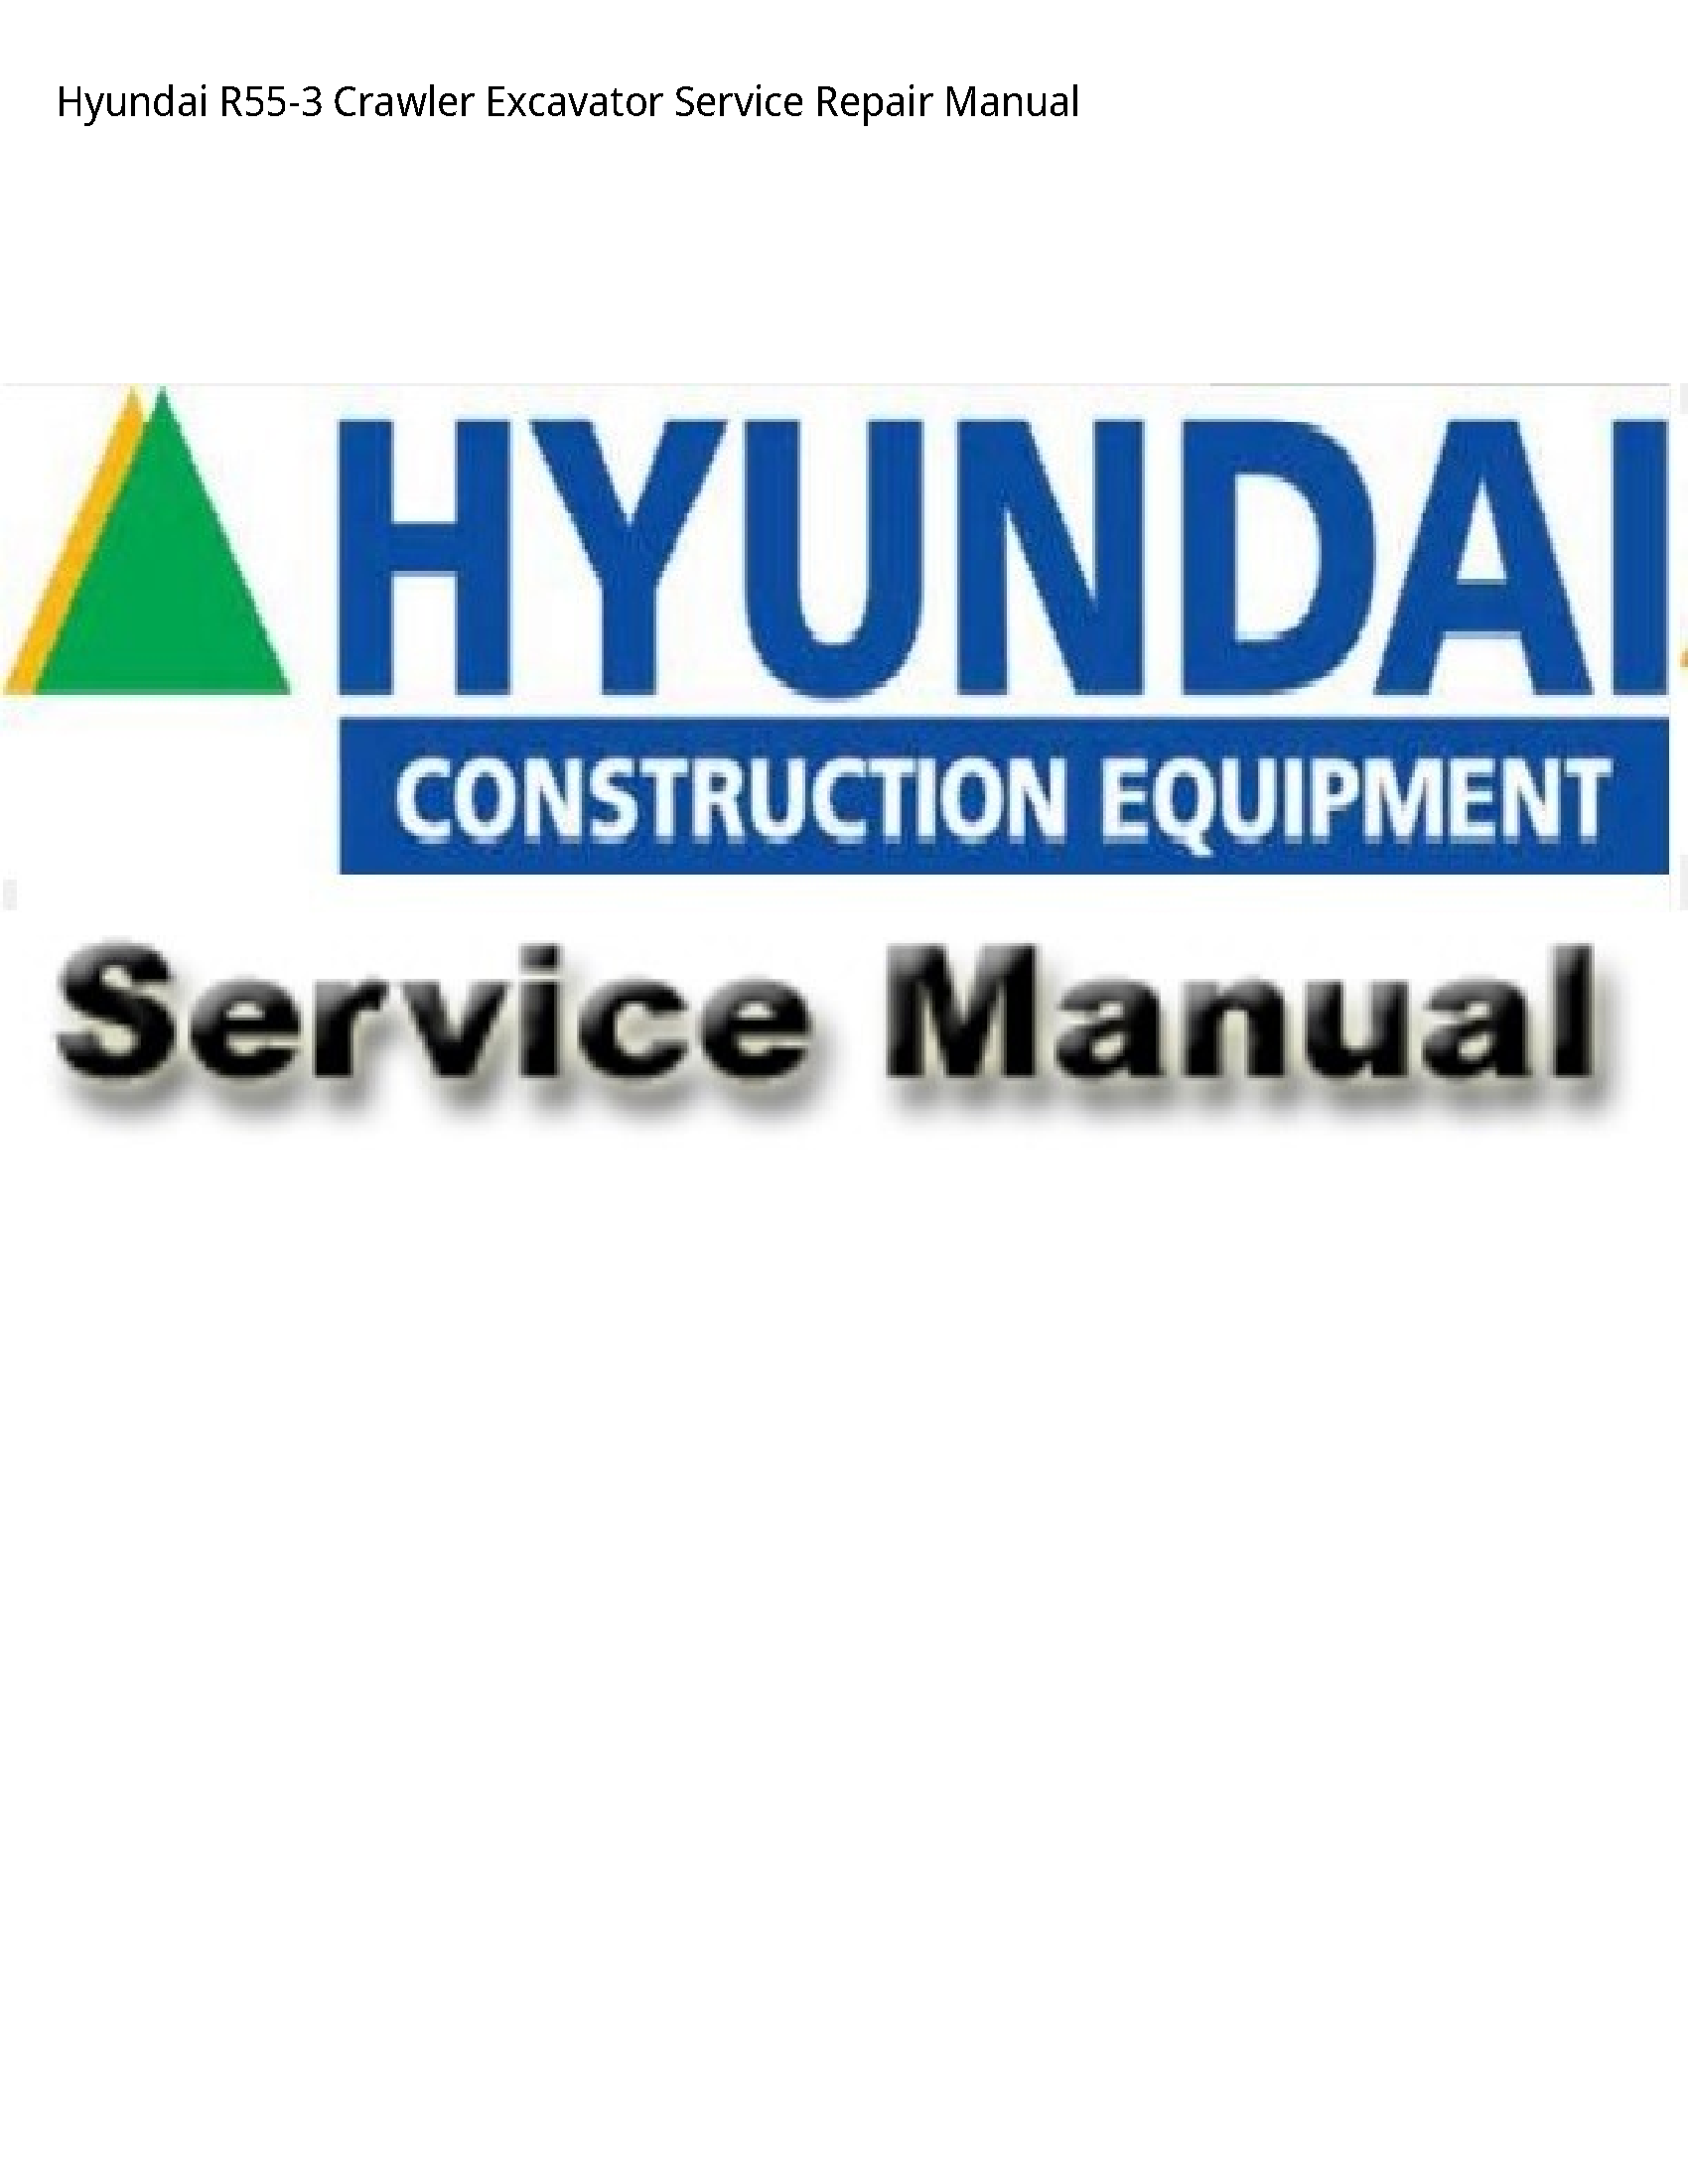 Hyundai R55-3 Crawler Excavator manual